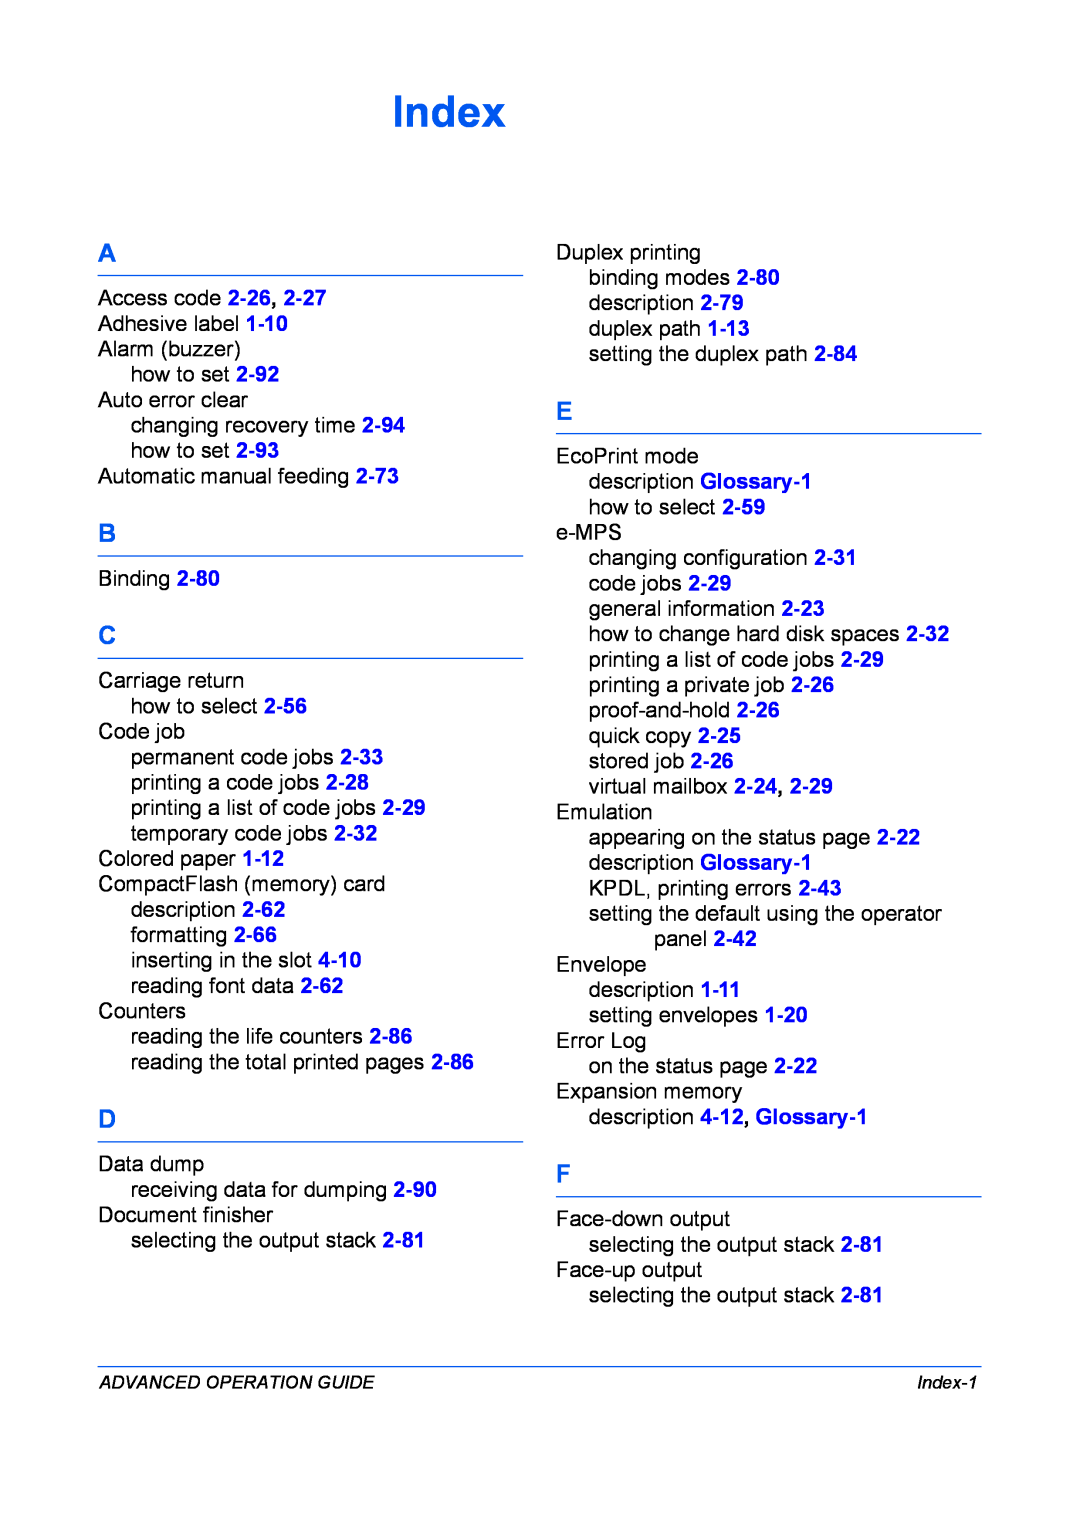 Kyocera 9530DN manual Index, description 4-12, Glossary-1 